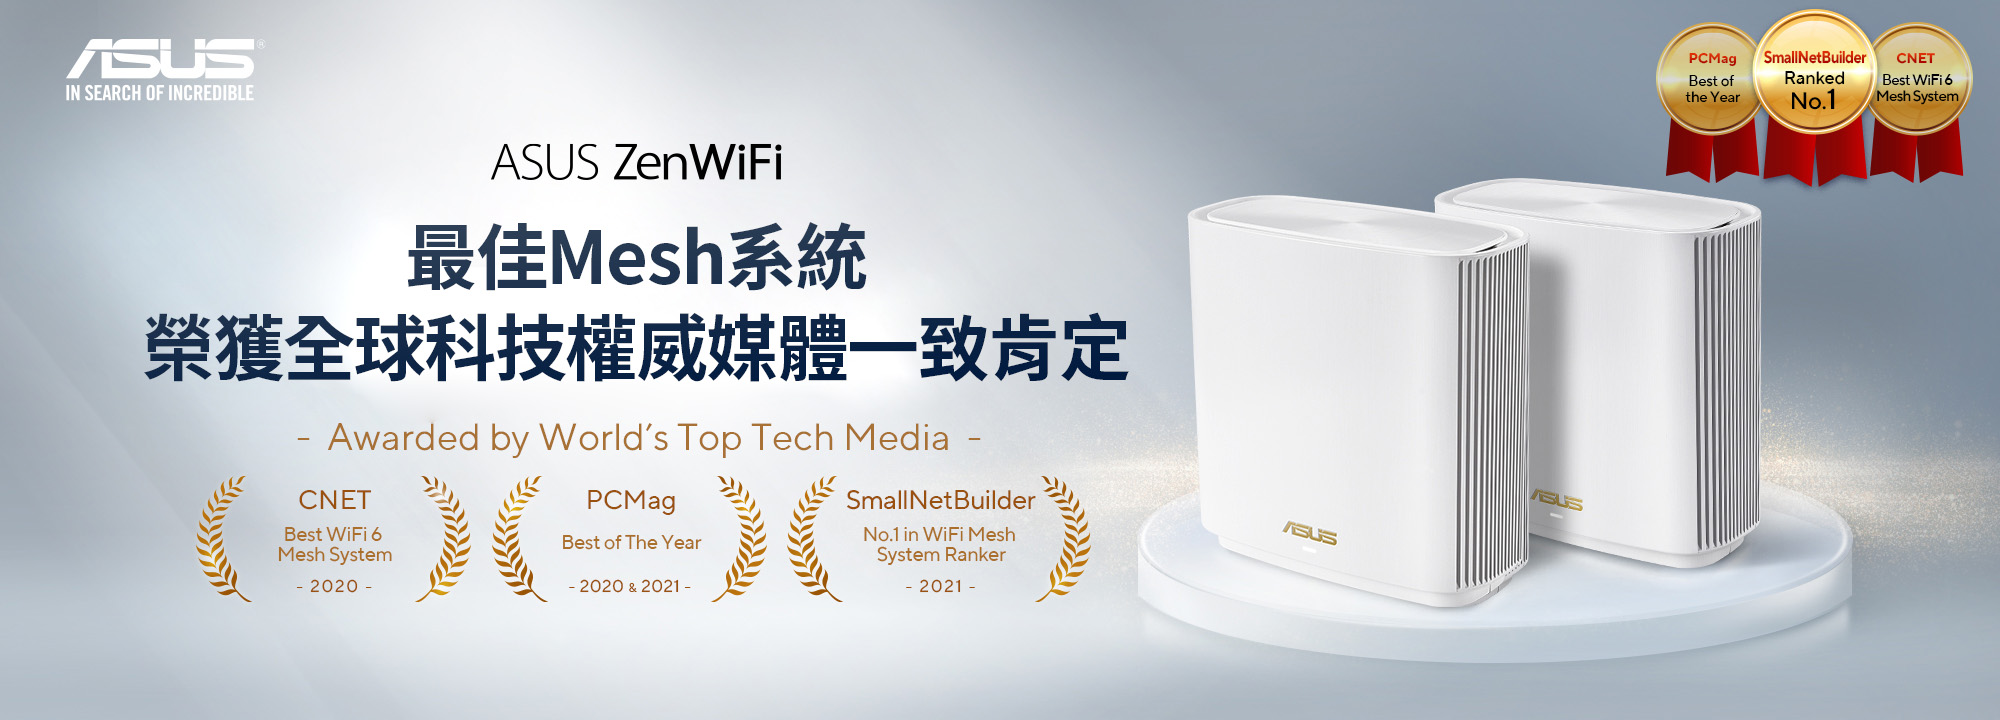 ASUS ZenWiFi 網狀 WiFi 系統榮獲世界頂尖科技媒體頒發最佳 WiFi 6 網狀路由器獎項，包括 CNET、PCMag 及 SmallNetBuilder。